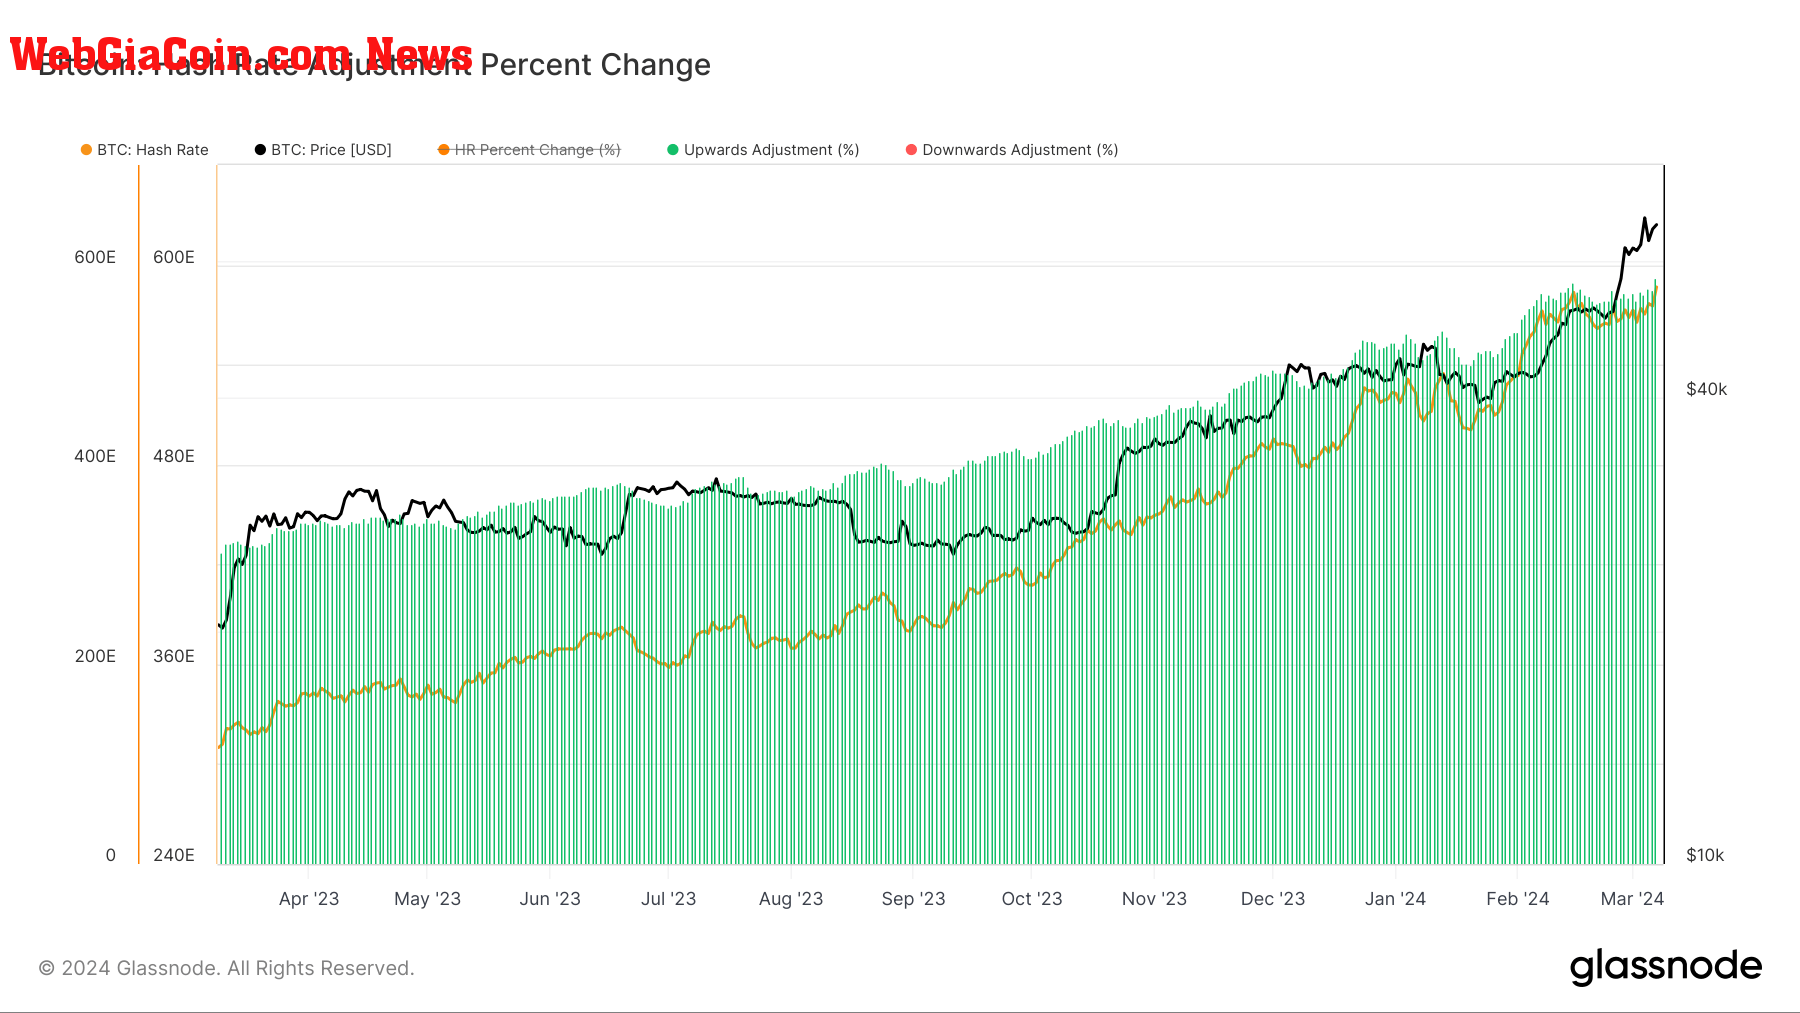 Bitcoin Hash Rate Percent Change: (Source: Glassnode)